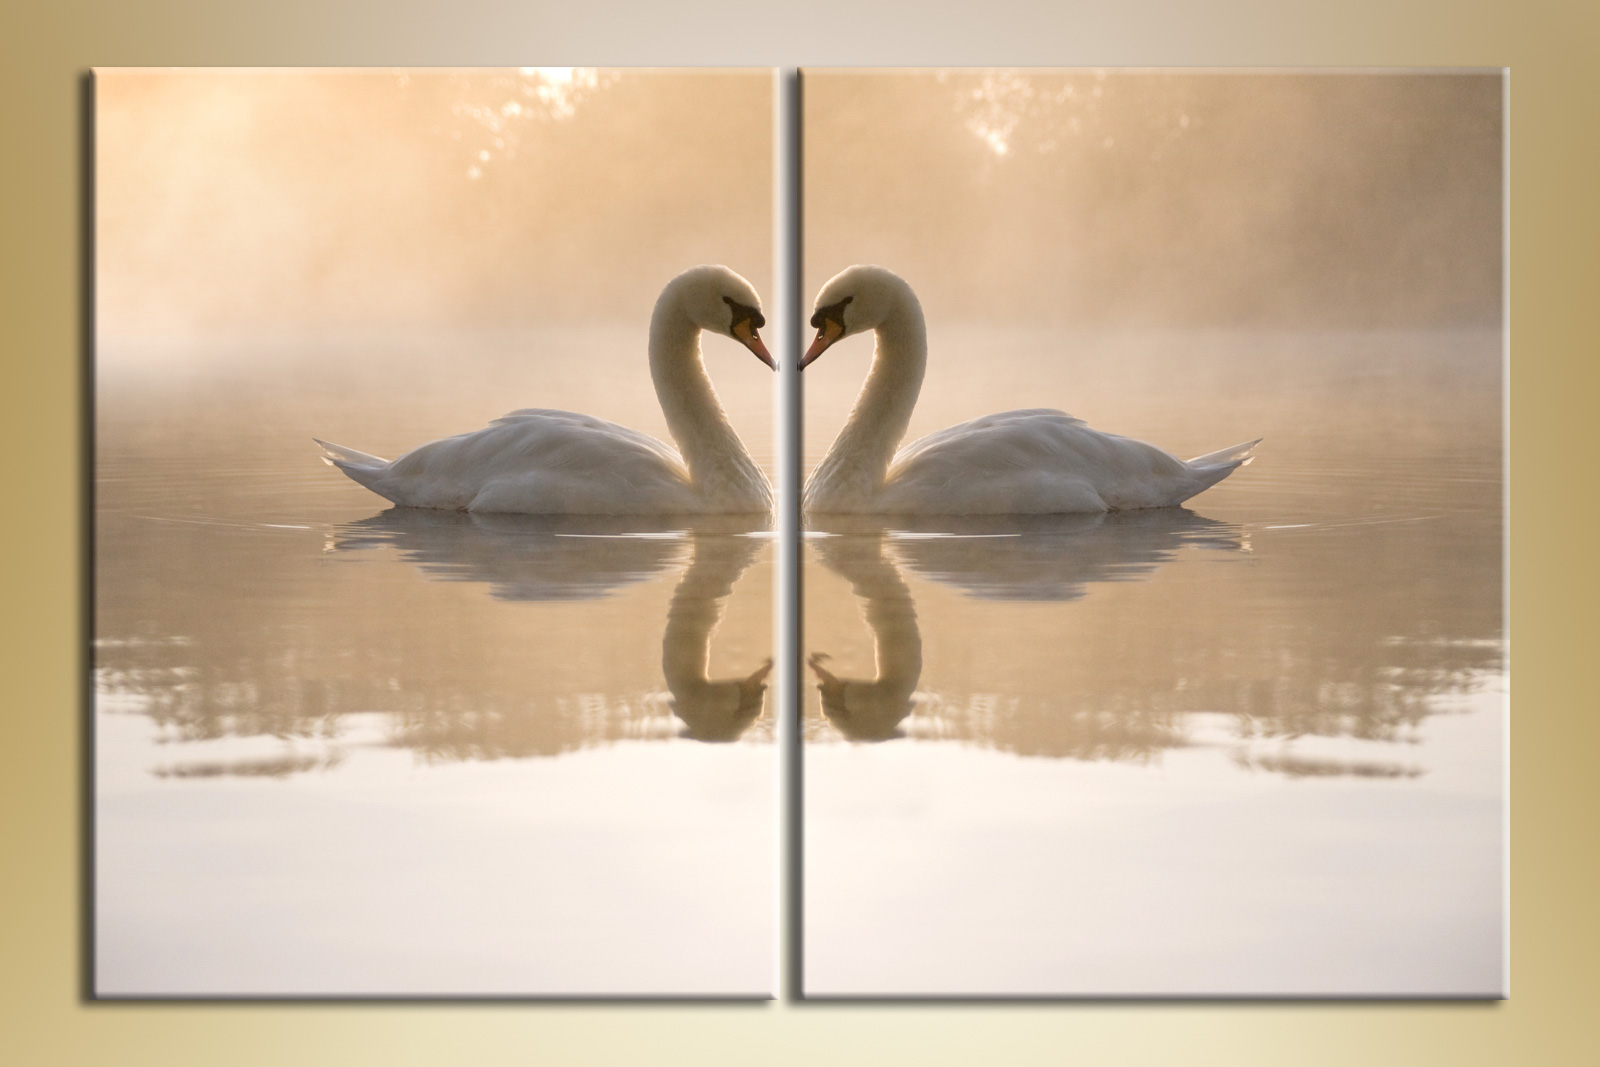 Pair Of Swans2